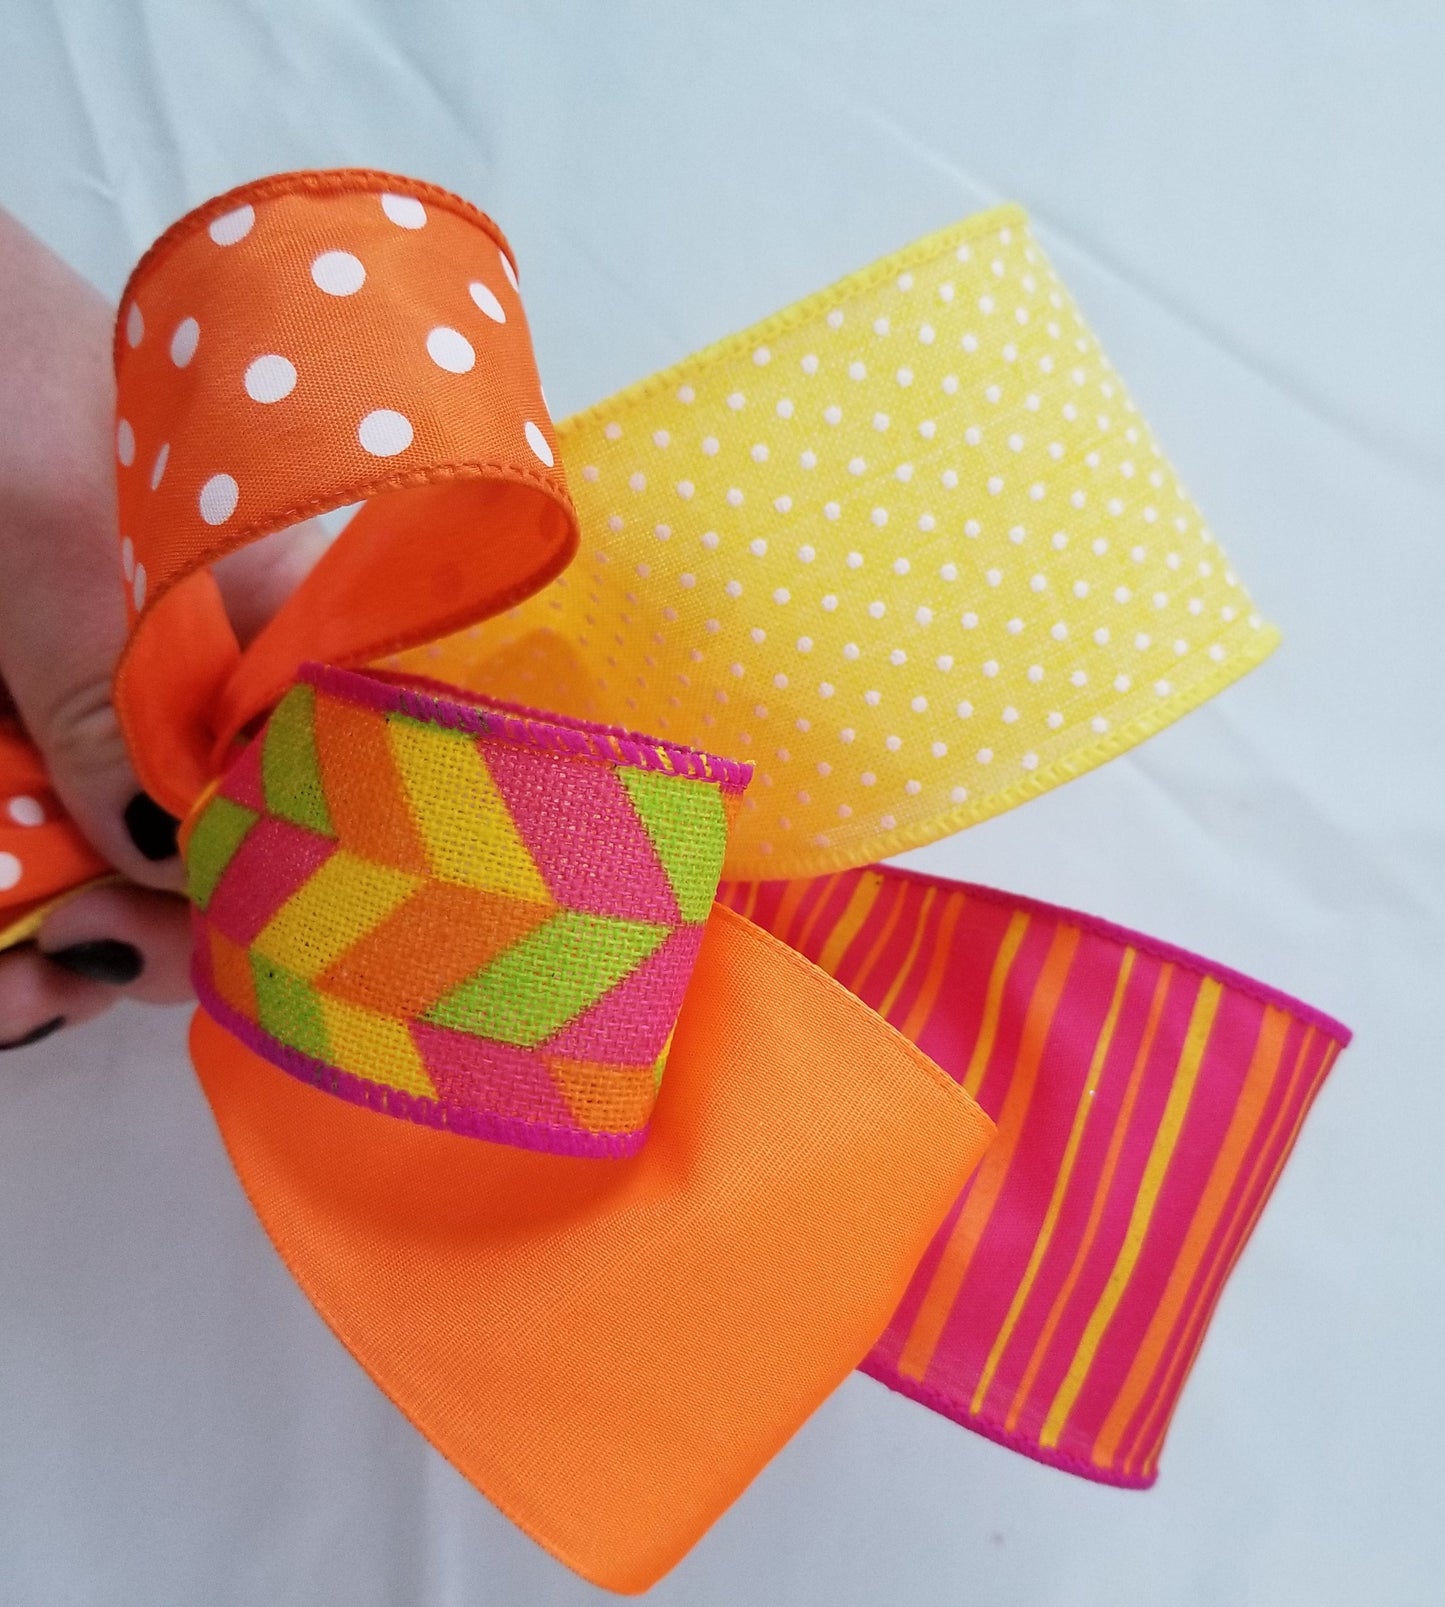 Pink and Yellow DIY Bow Kit - Designer DIY